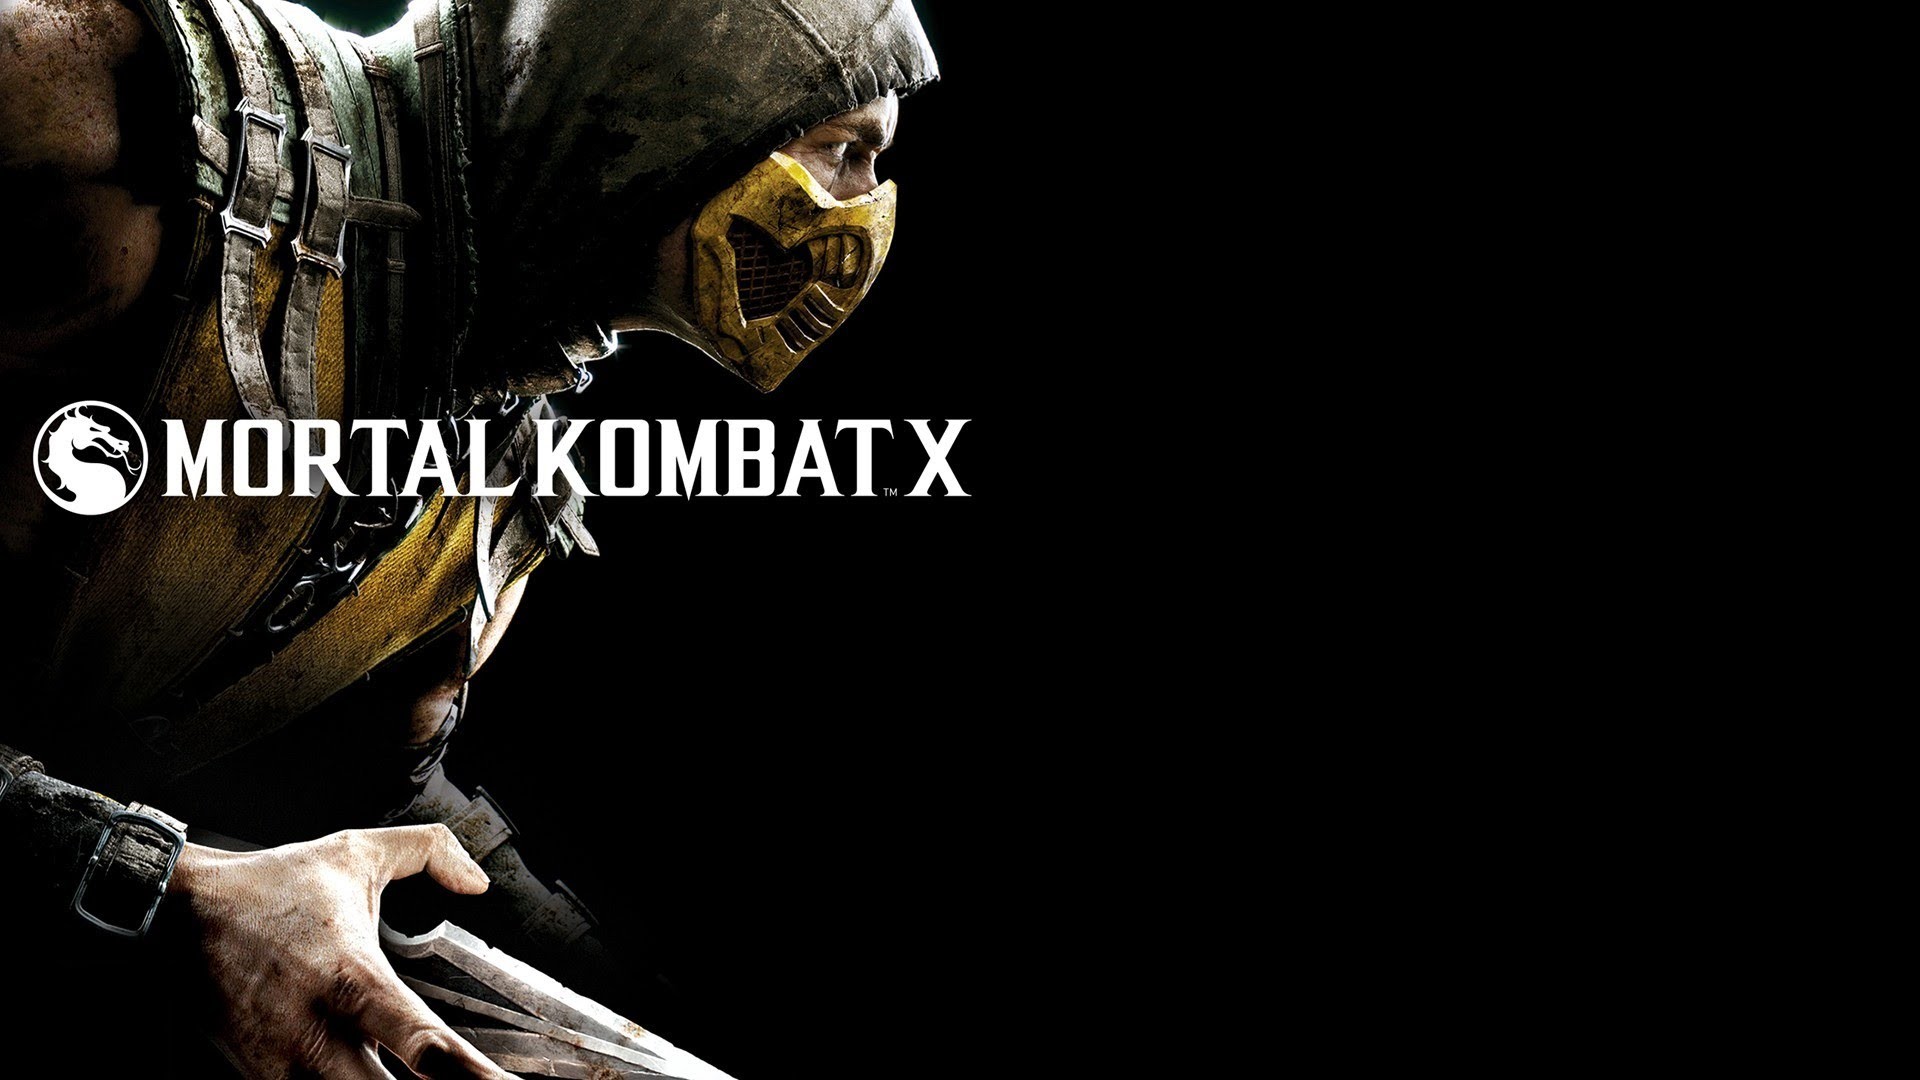 1920x1080 Mortal Kombat X wallpapers